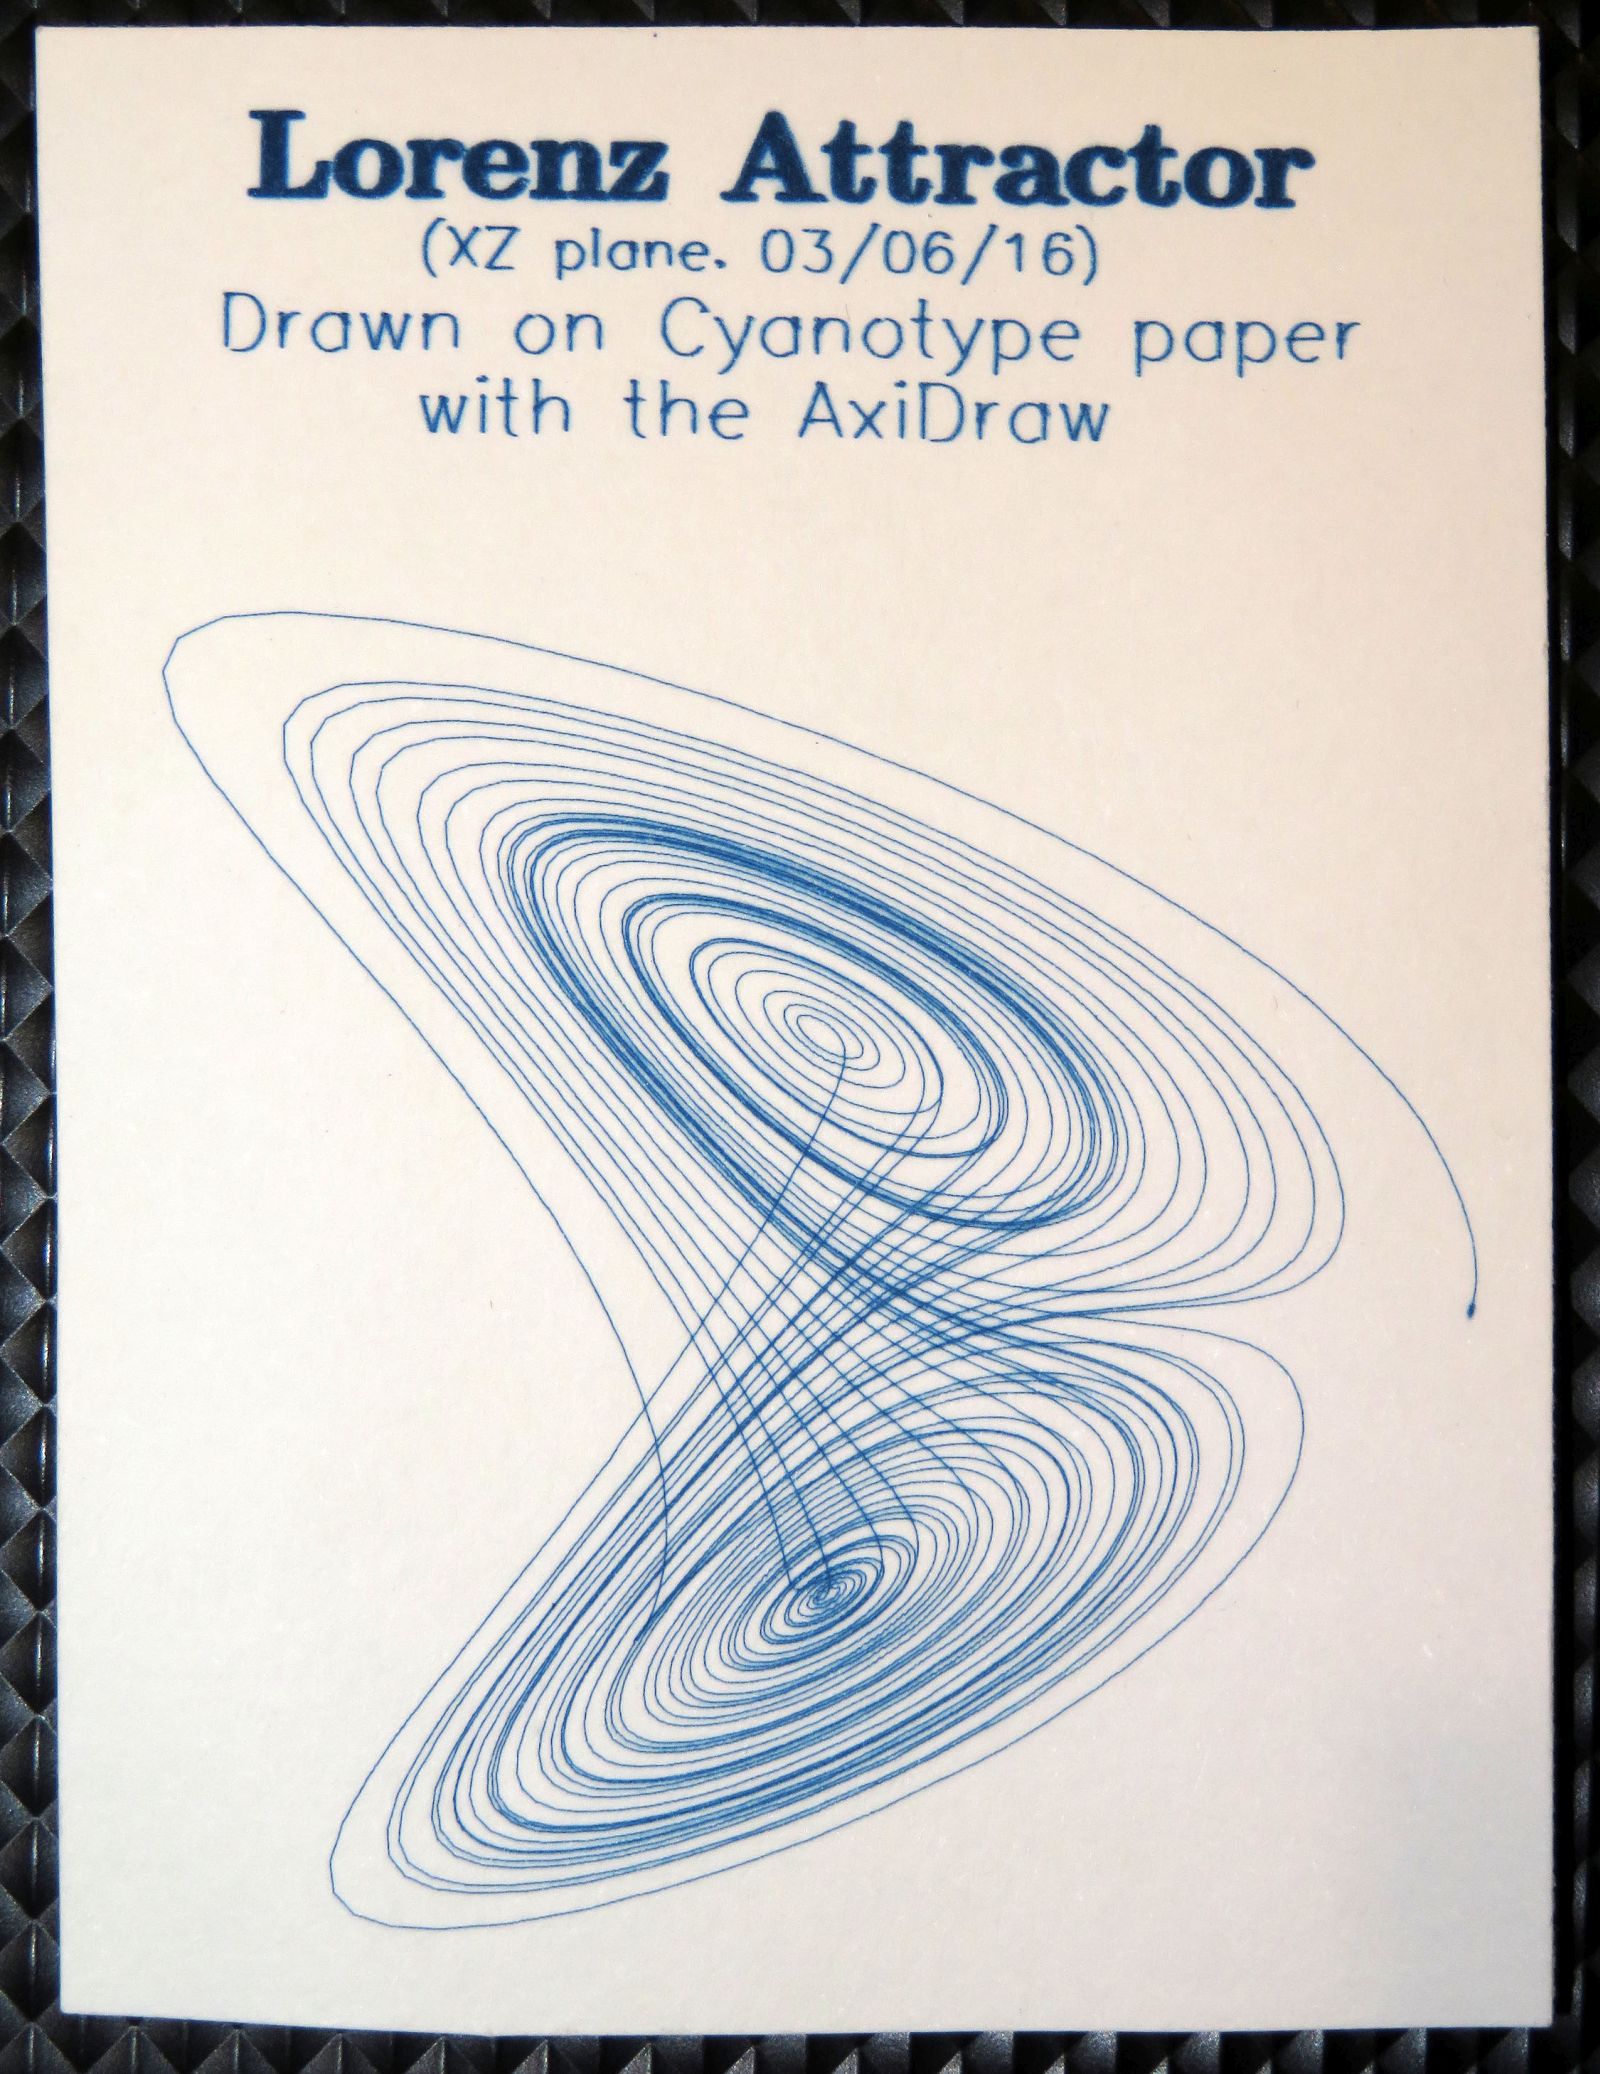 AxiDraw - UV laser exposing Cyanotype paper